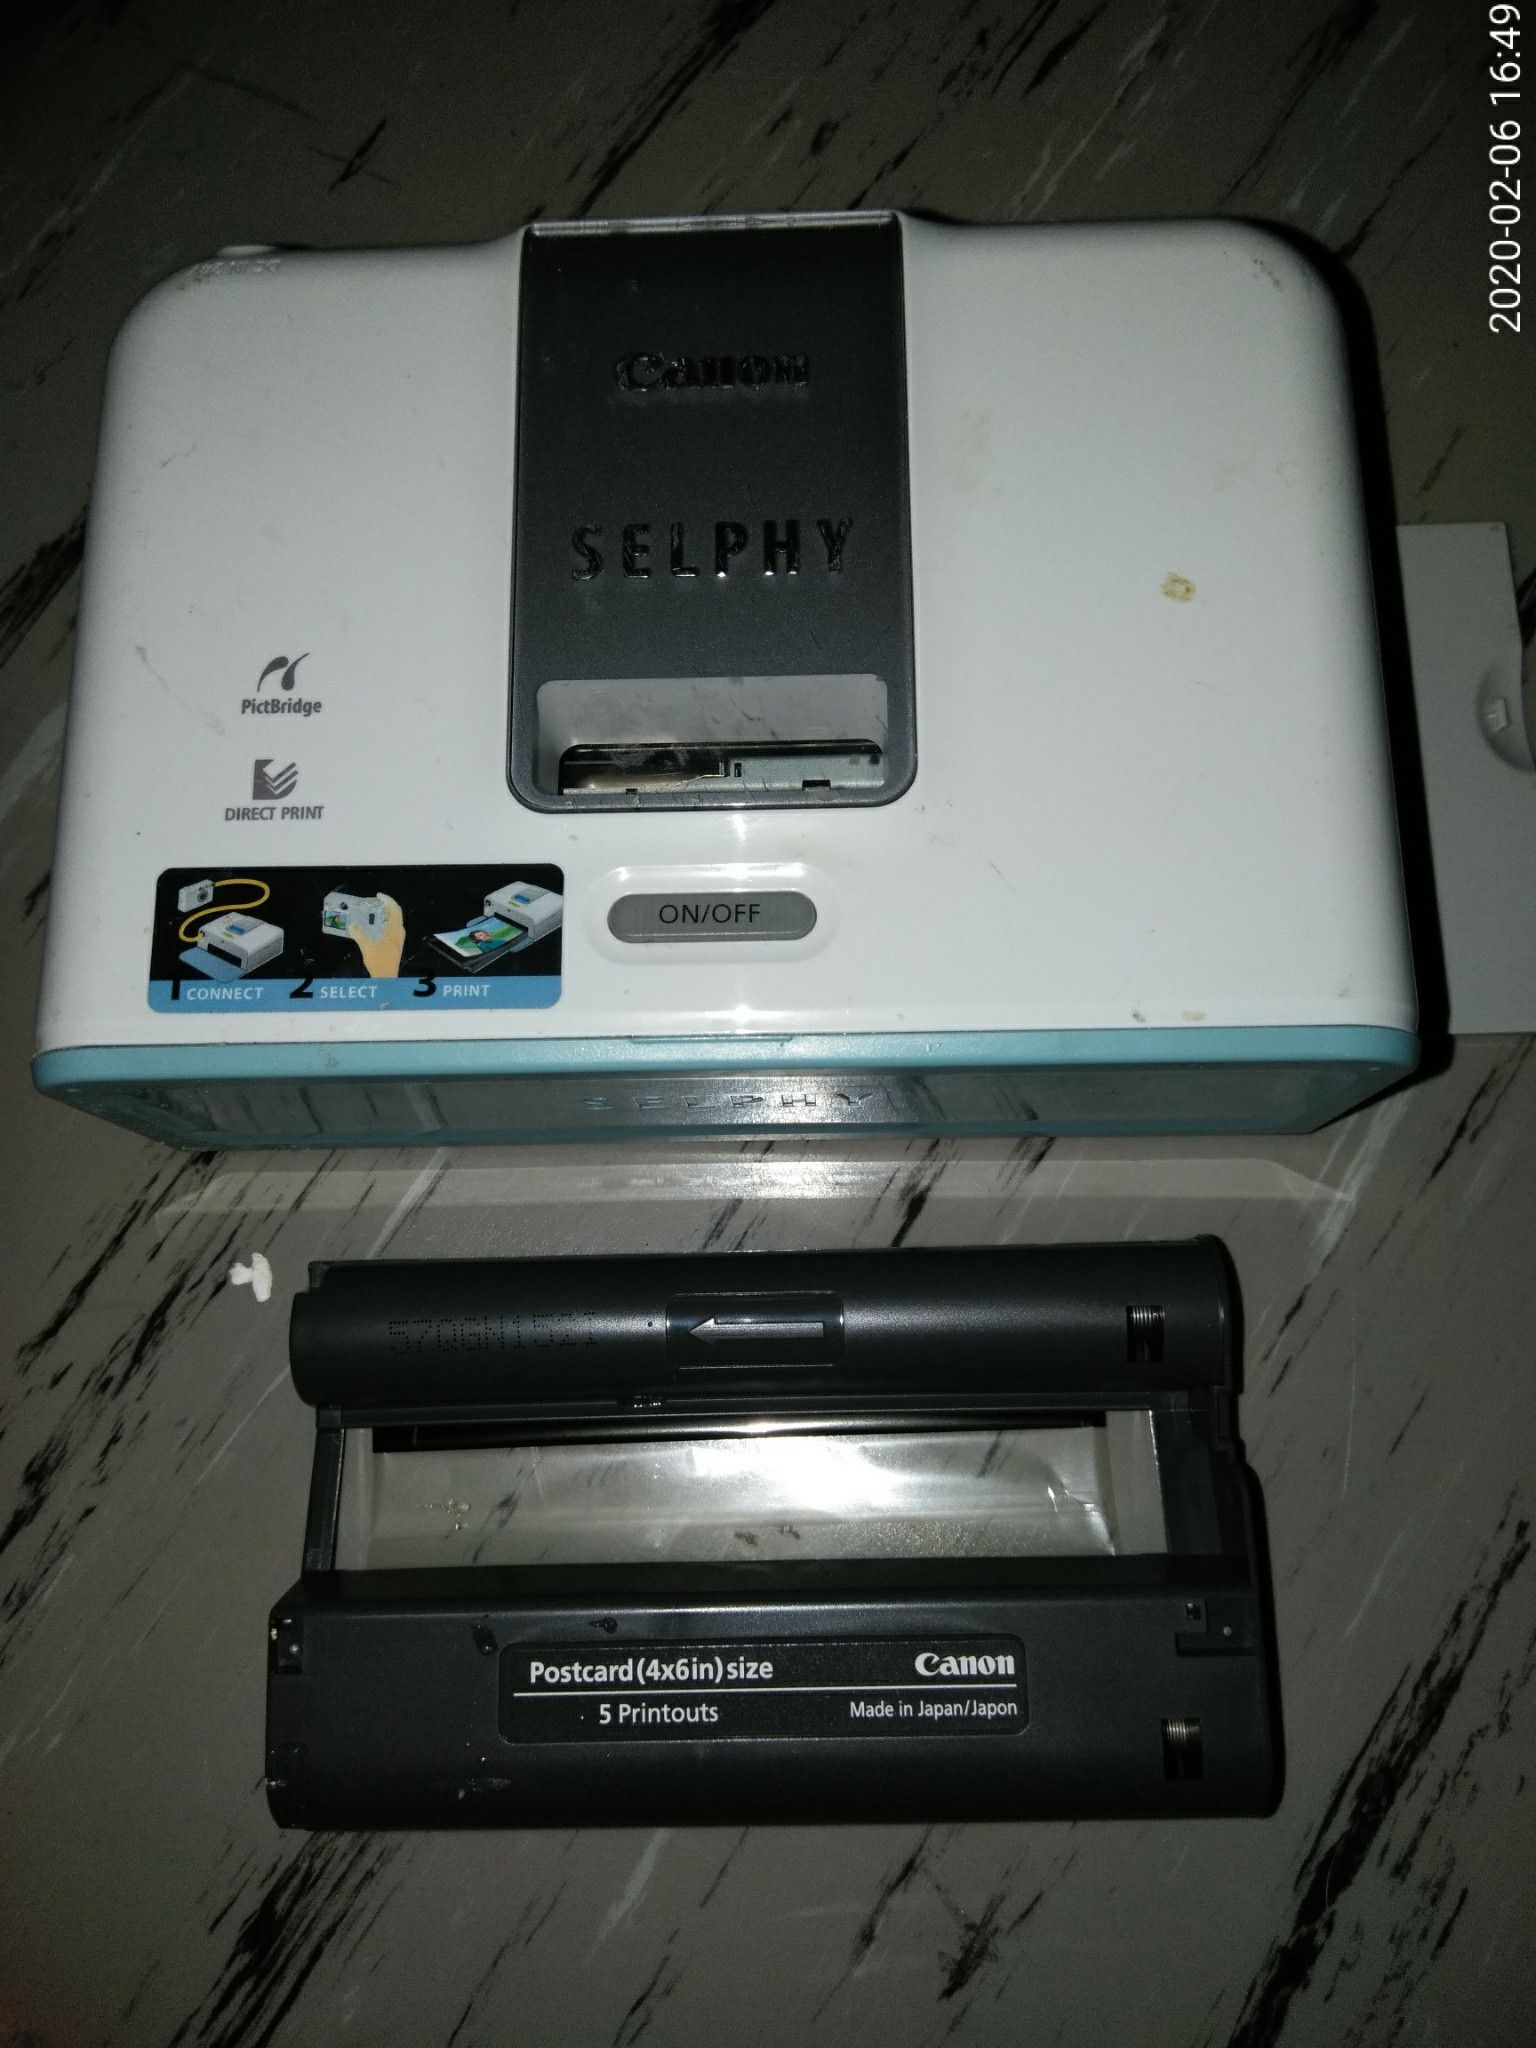 Canon selphy digital photo printer.